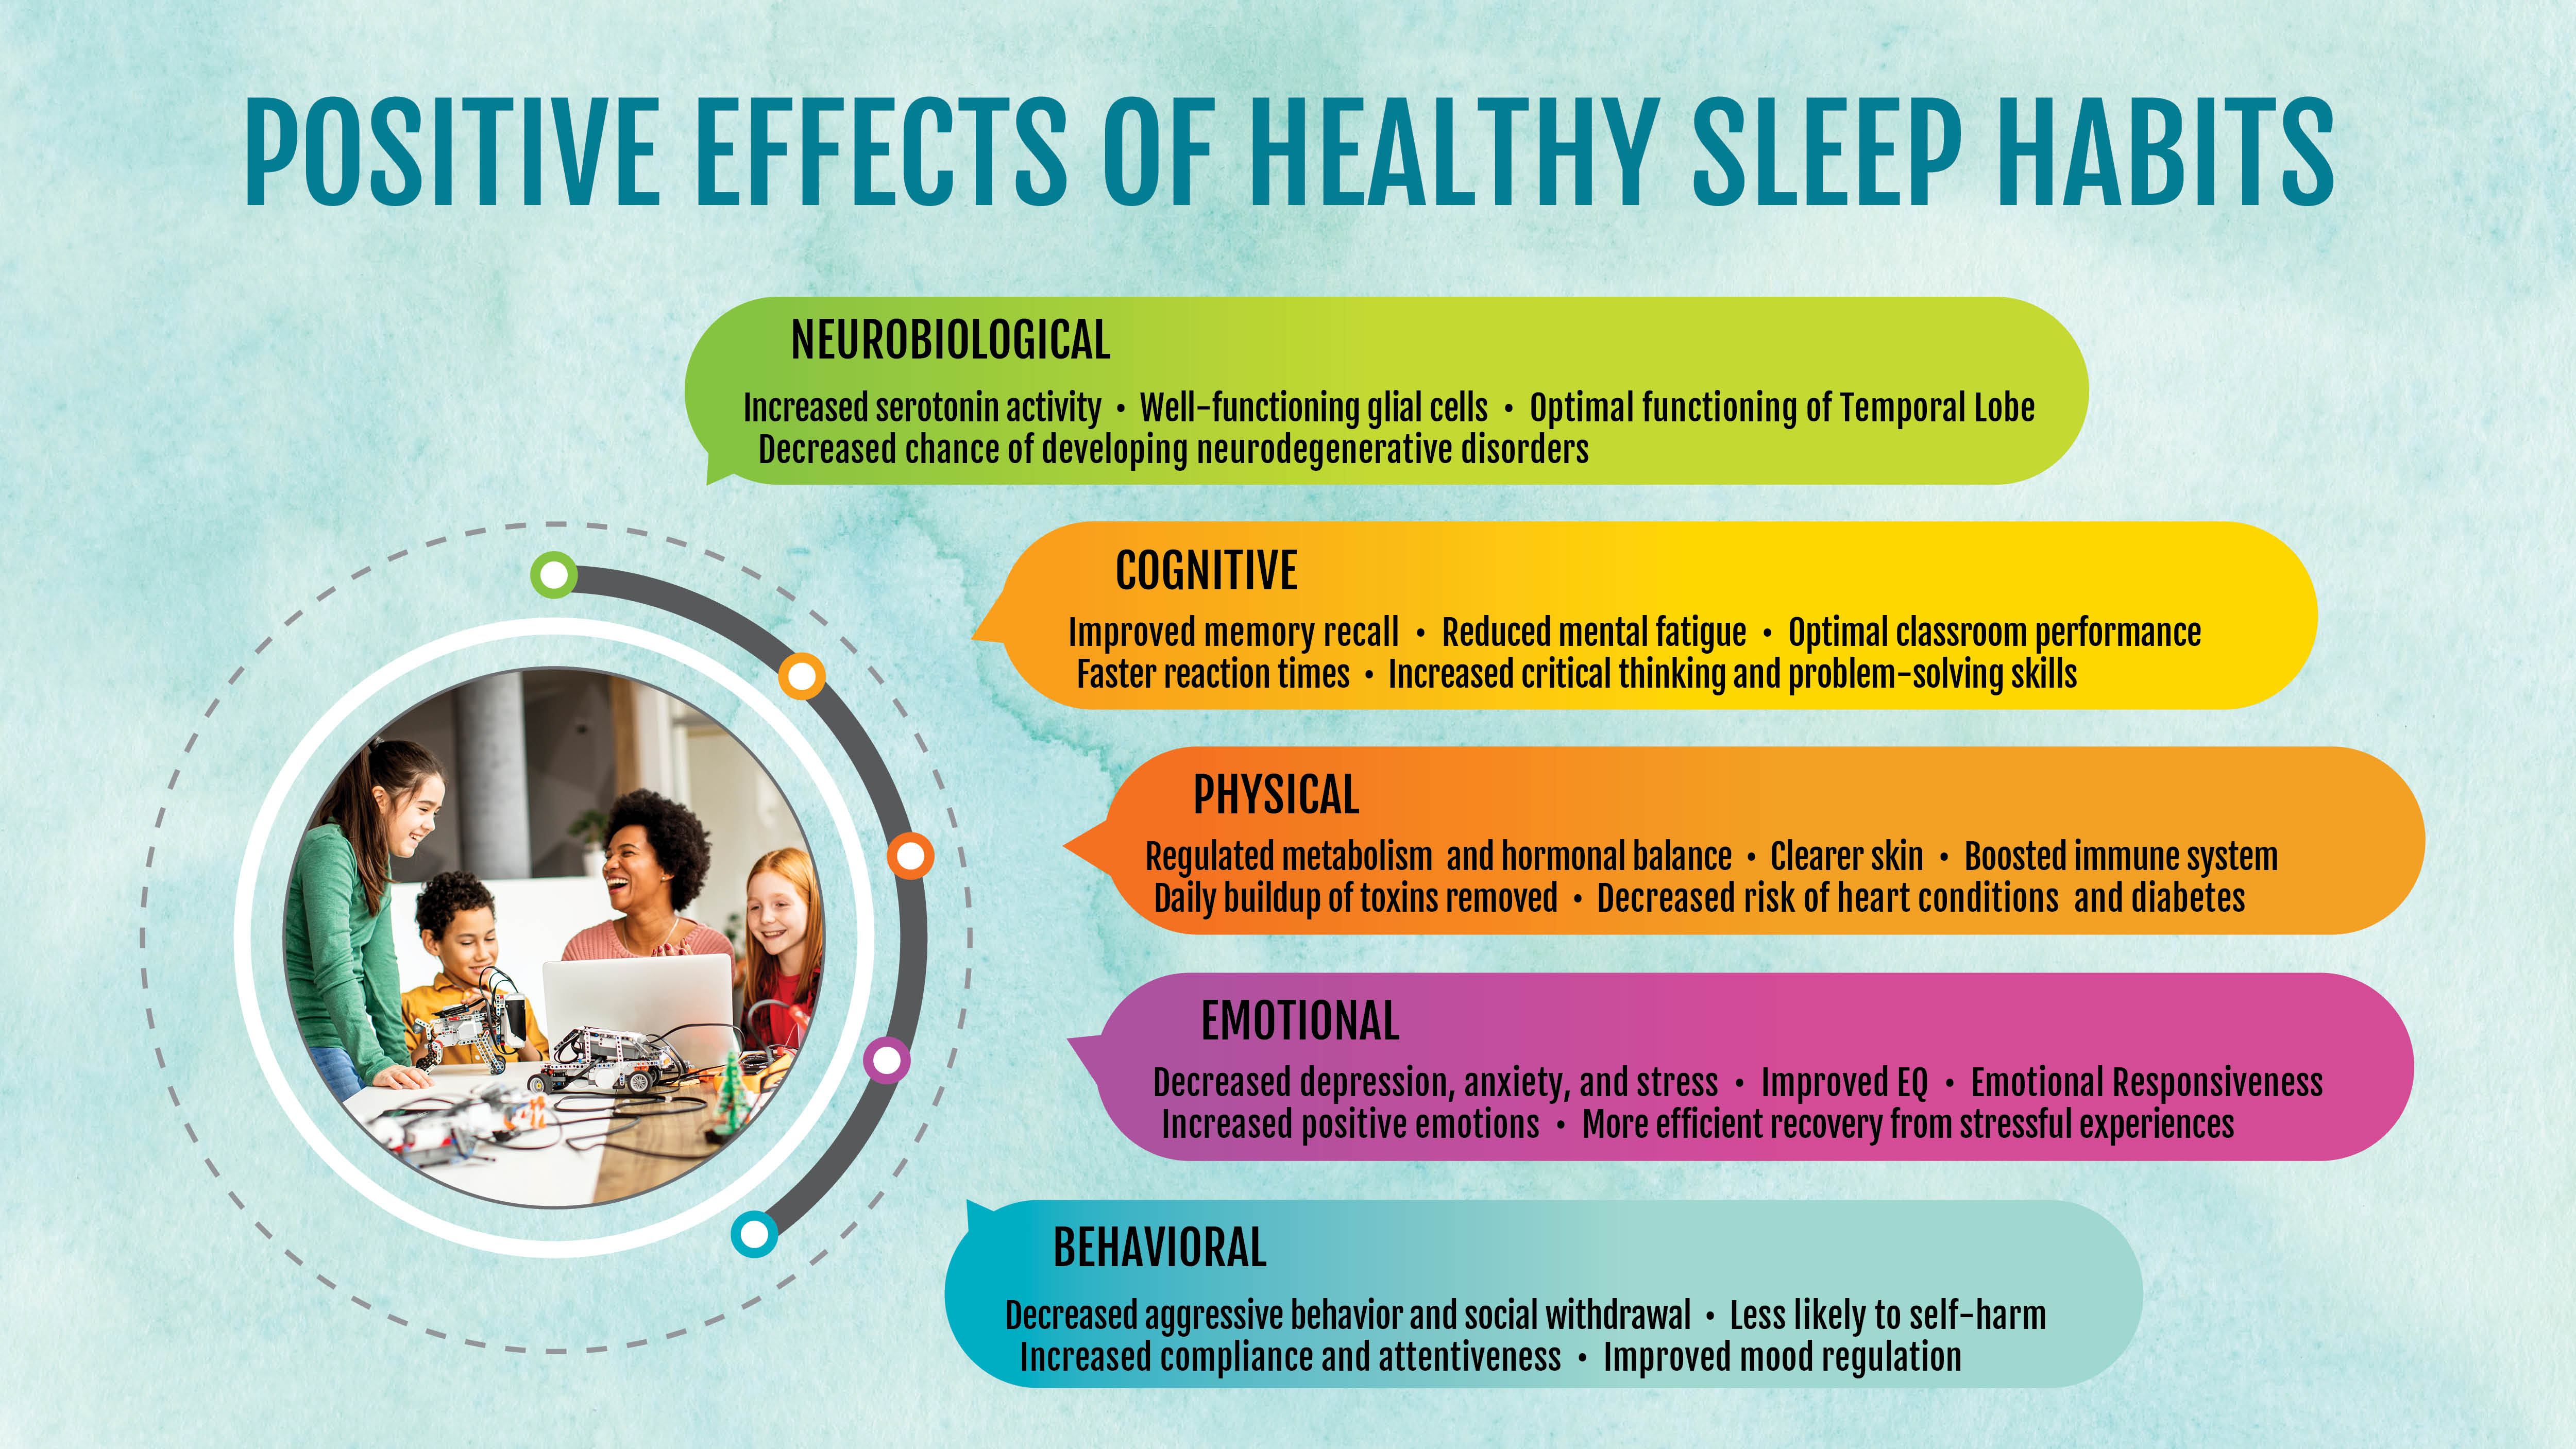 Positive effects of healthy sleep habits